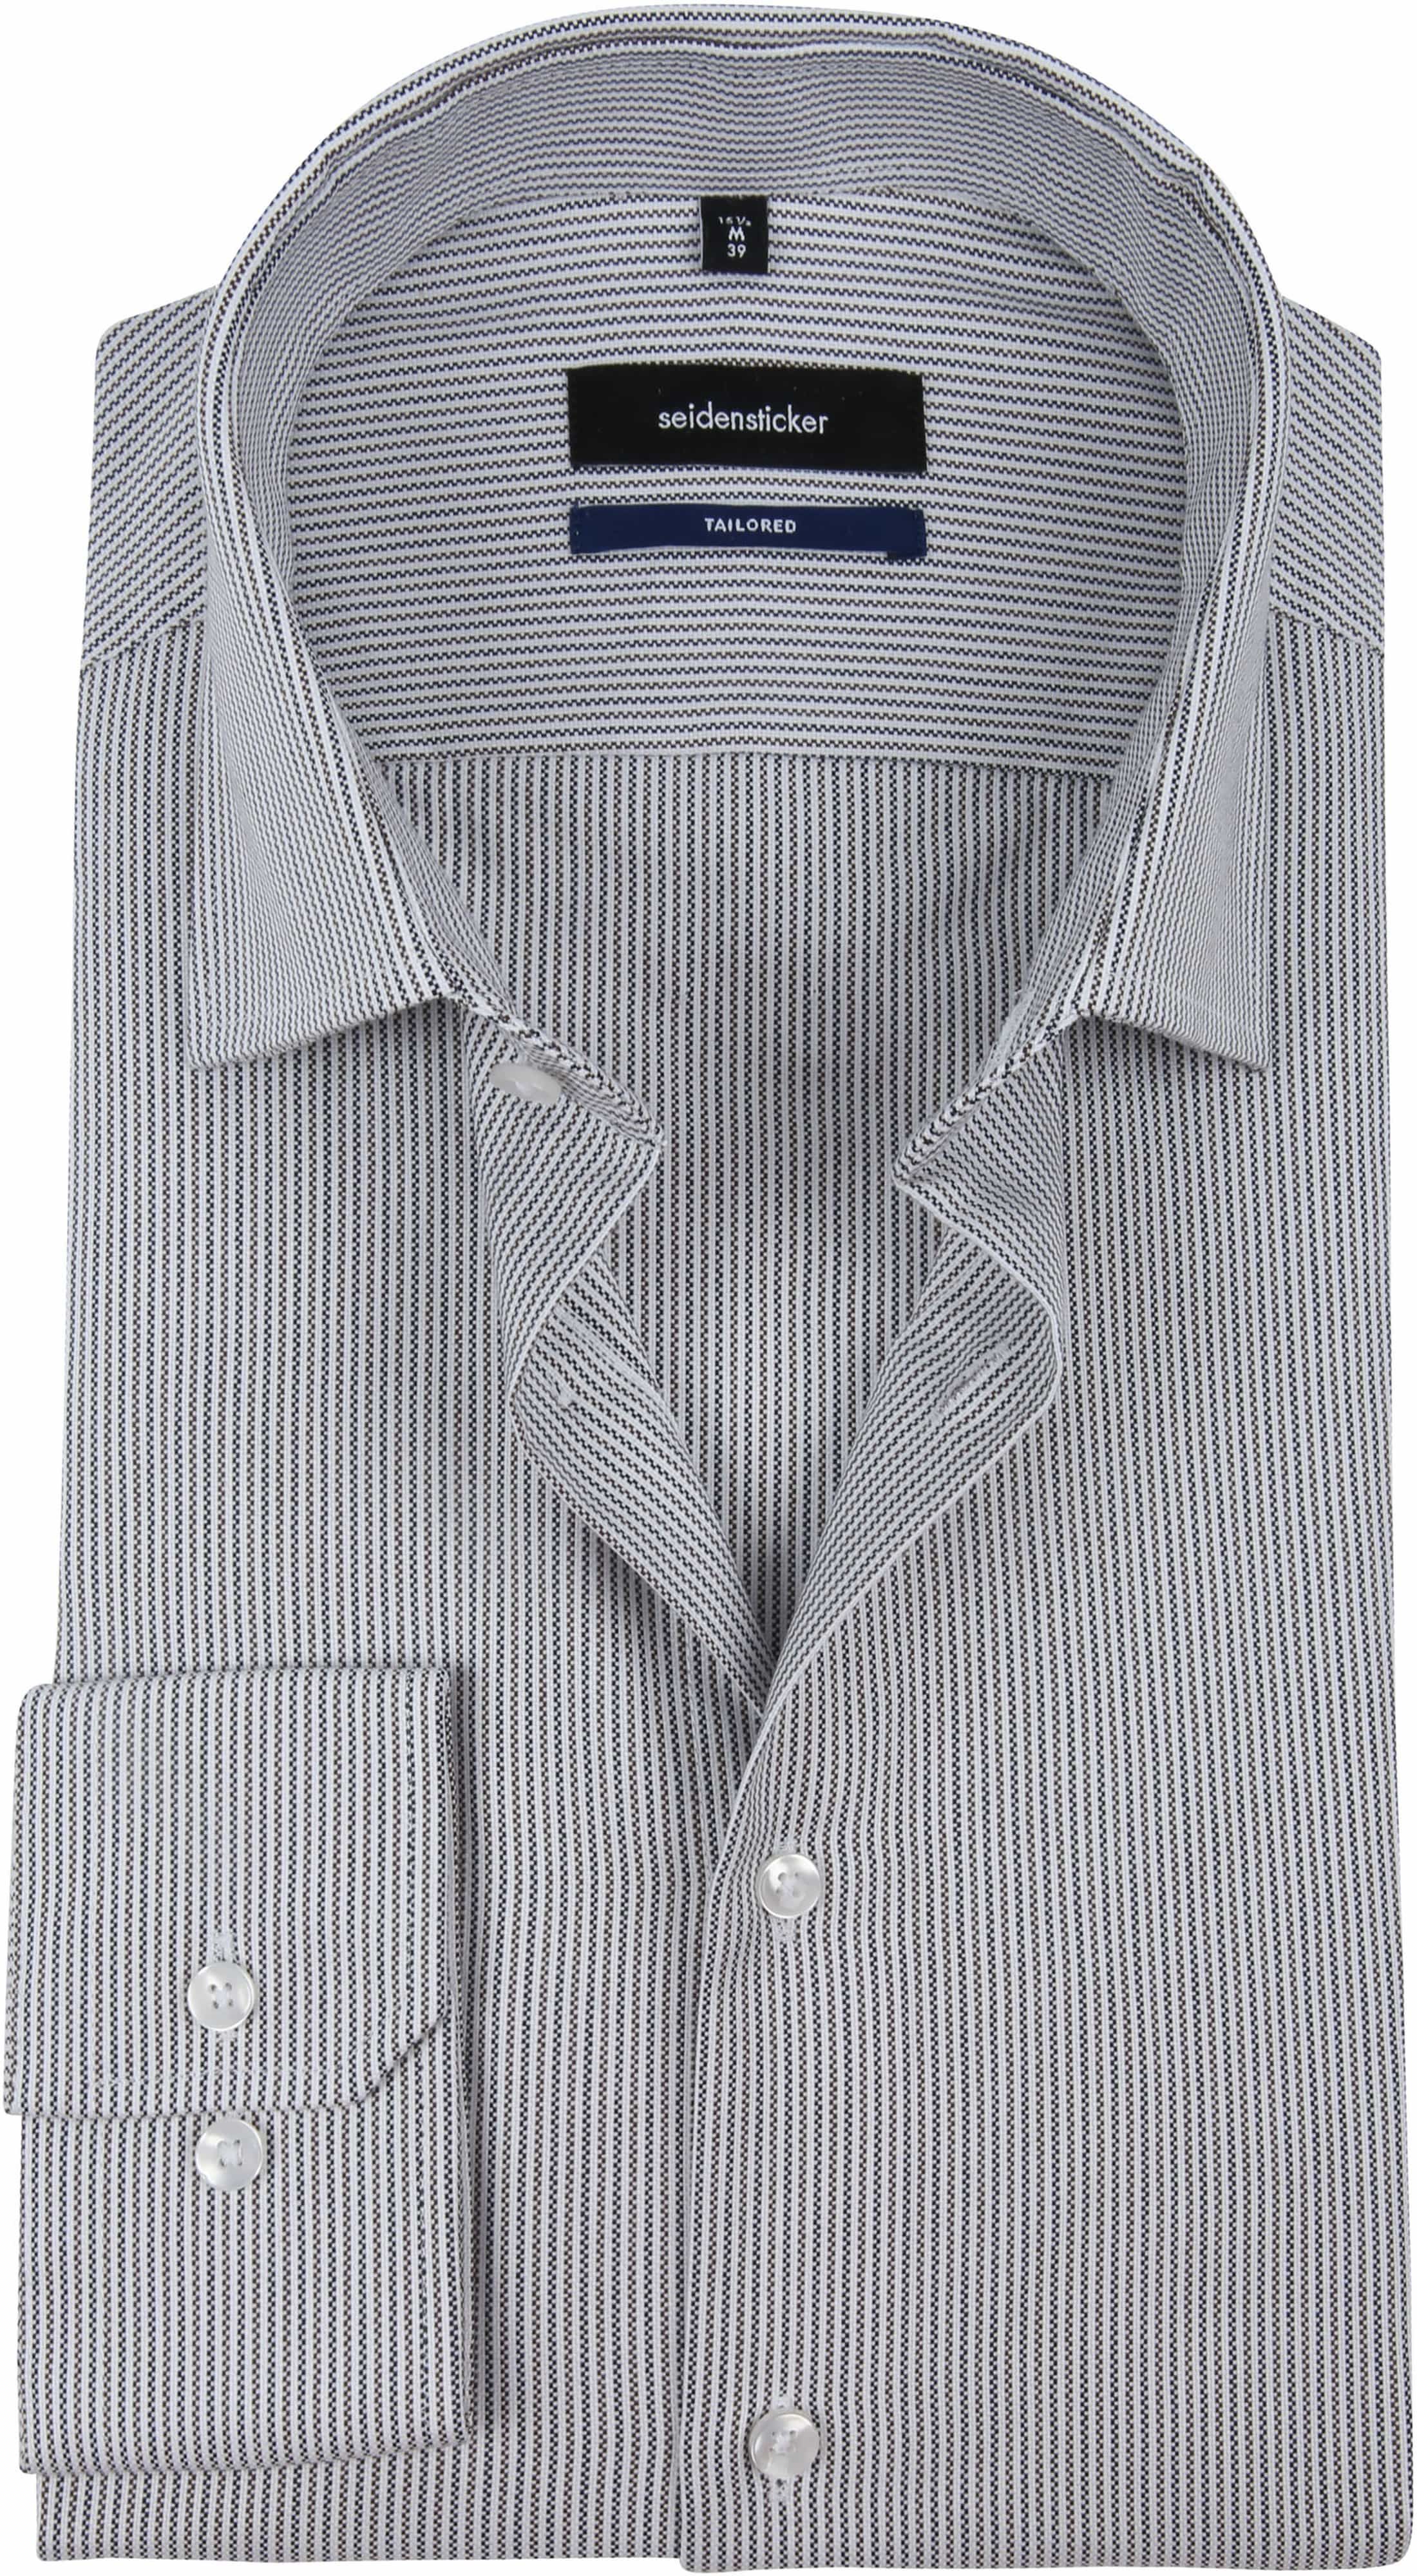 Seidensticker MF Shirt Stripes Dark Blue Grey Multicolour size 15 1/2